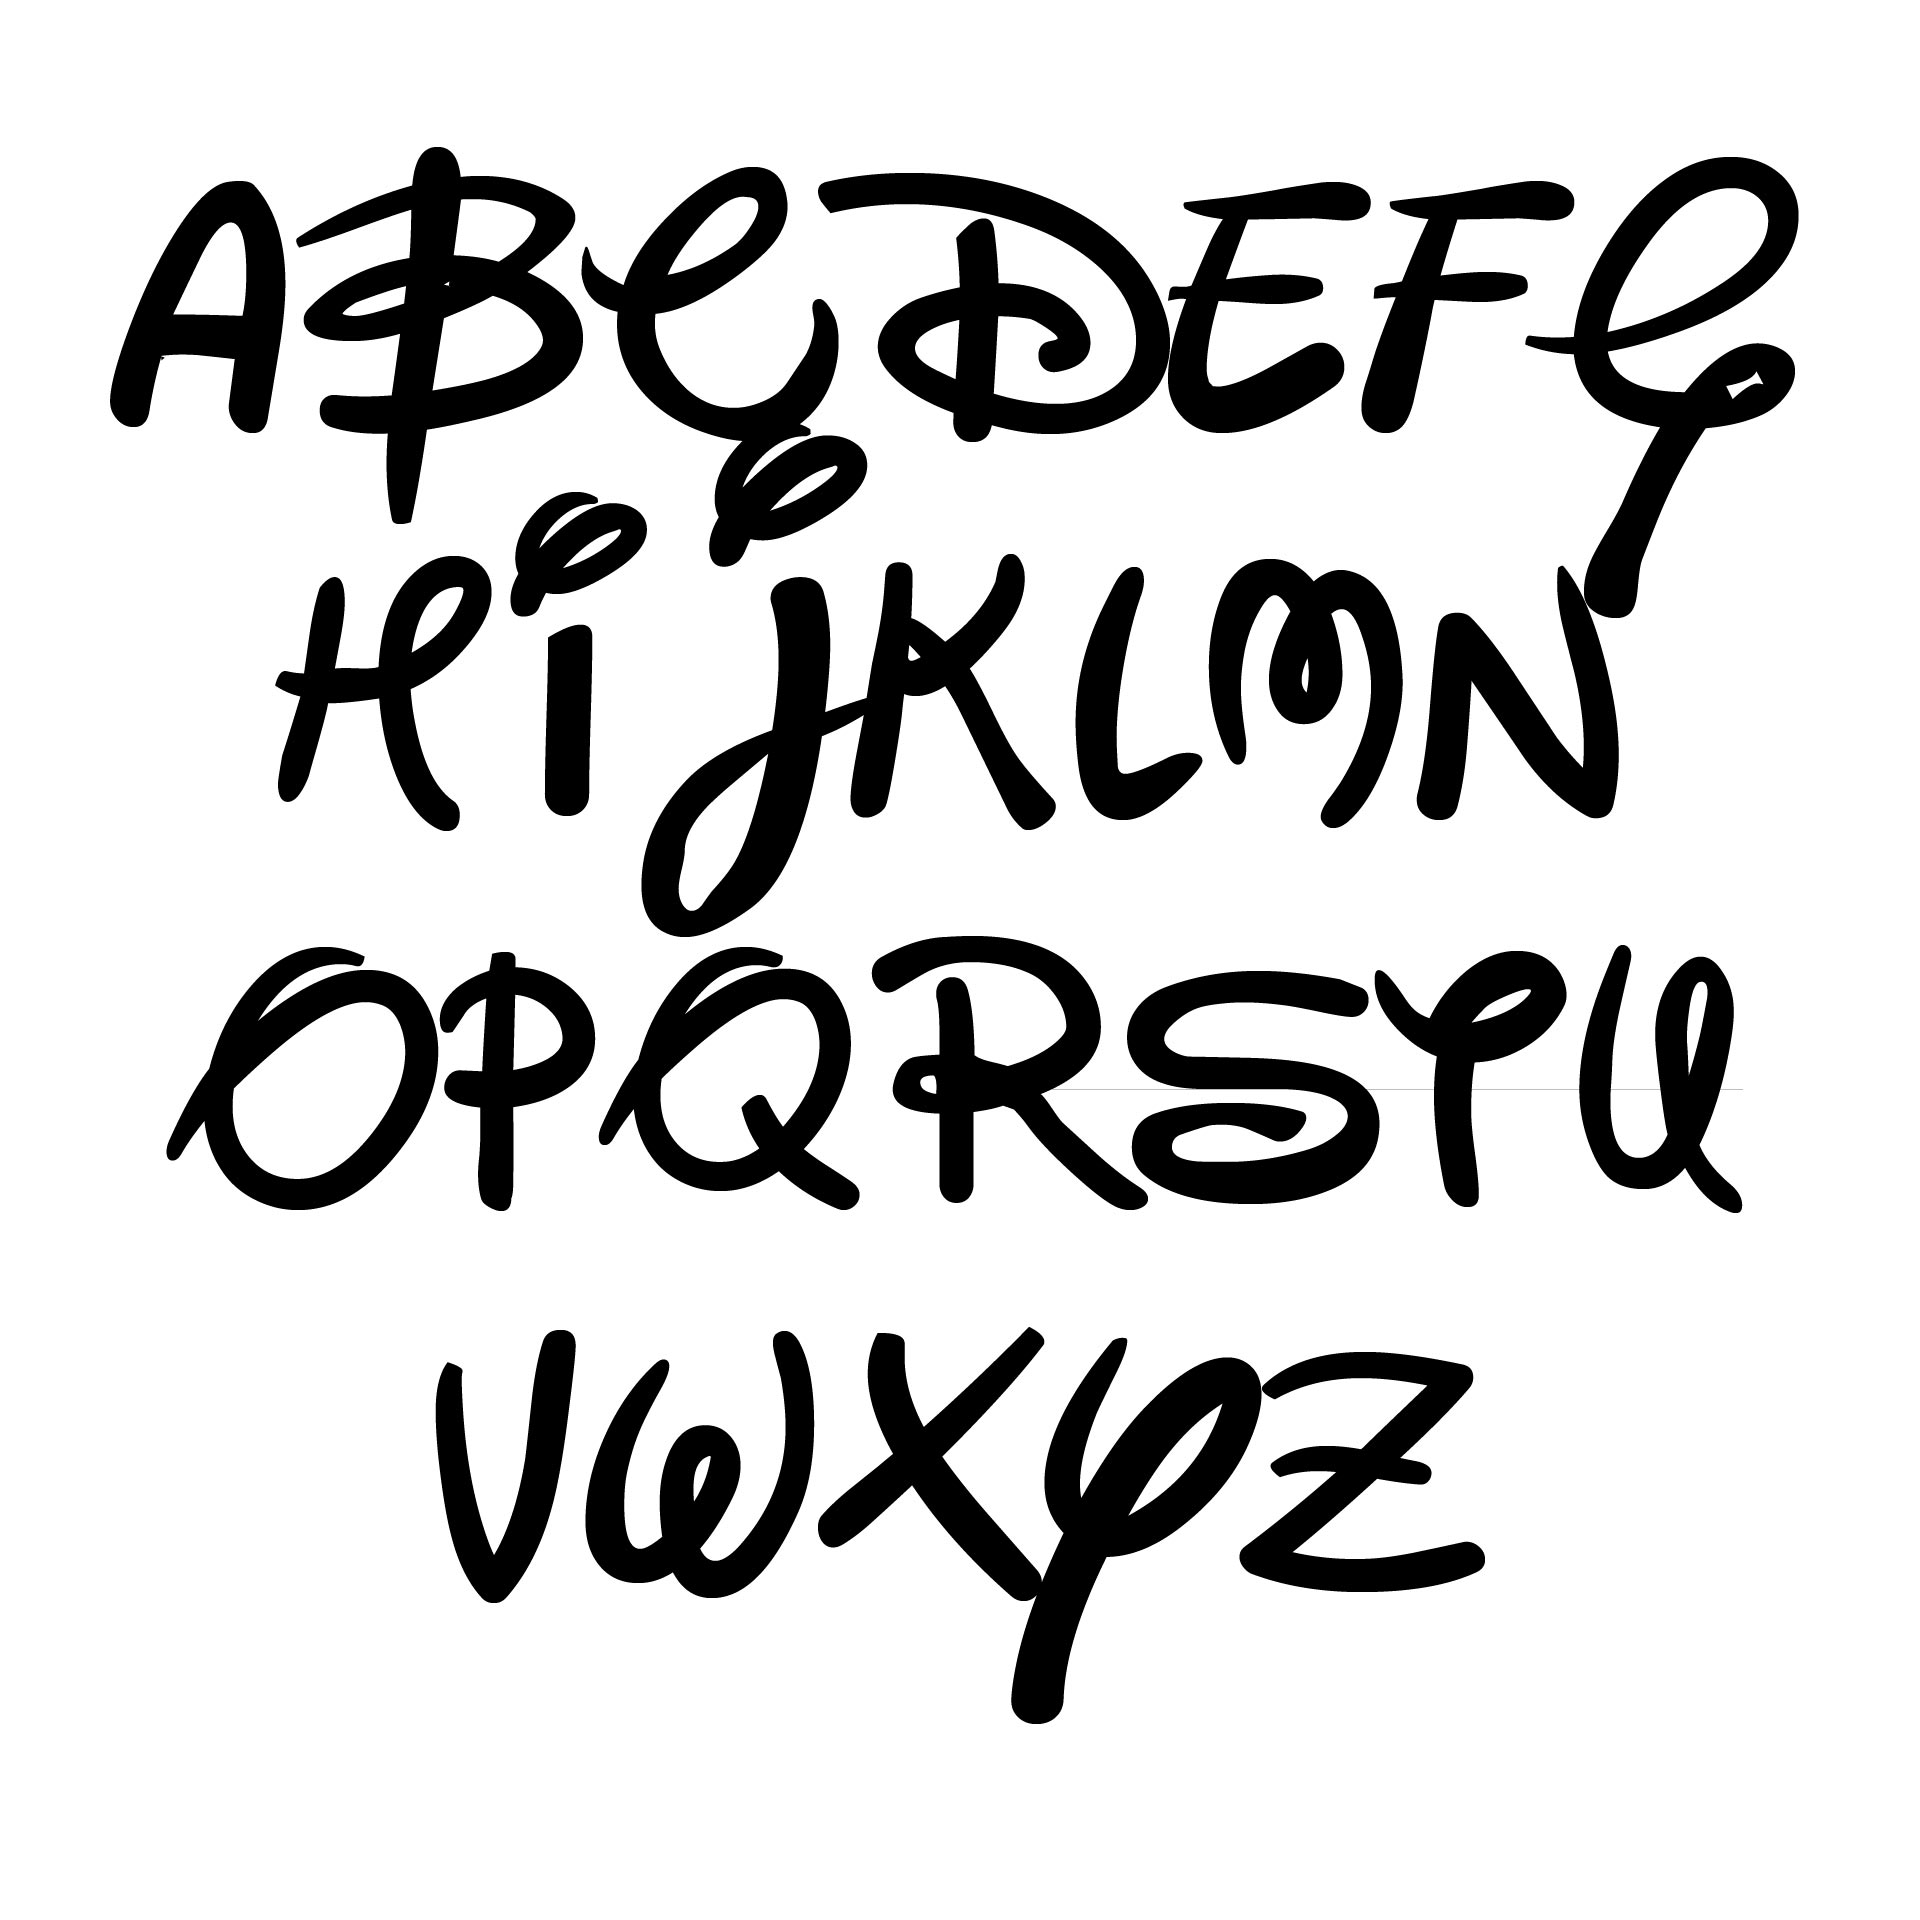 Disney Alphabet Letters Printable Printable Templates vrogue co